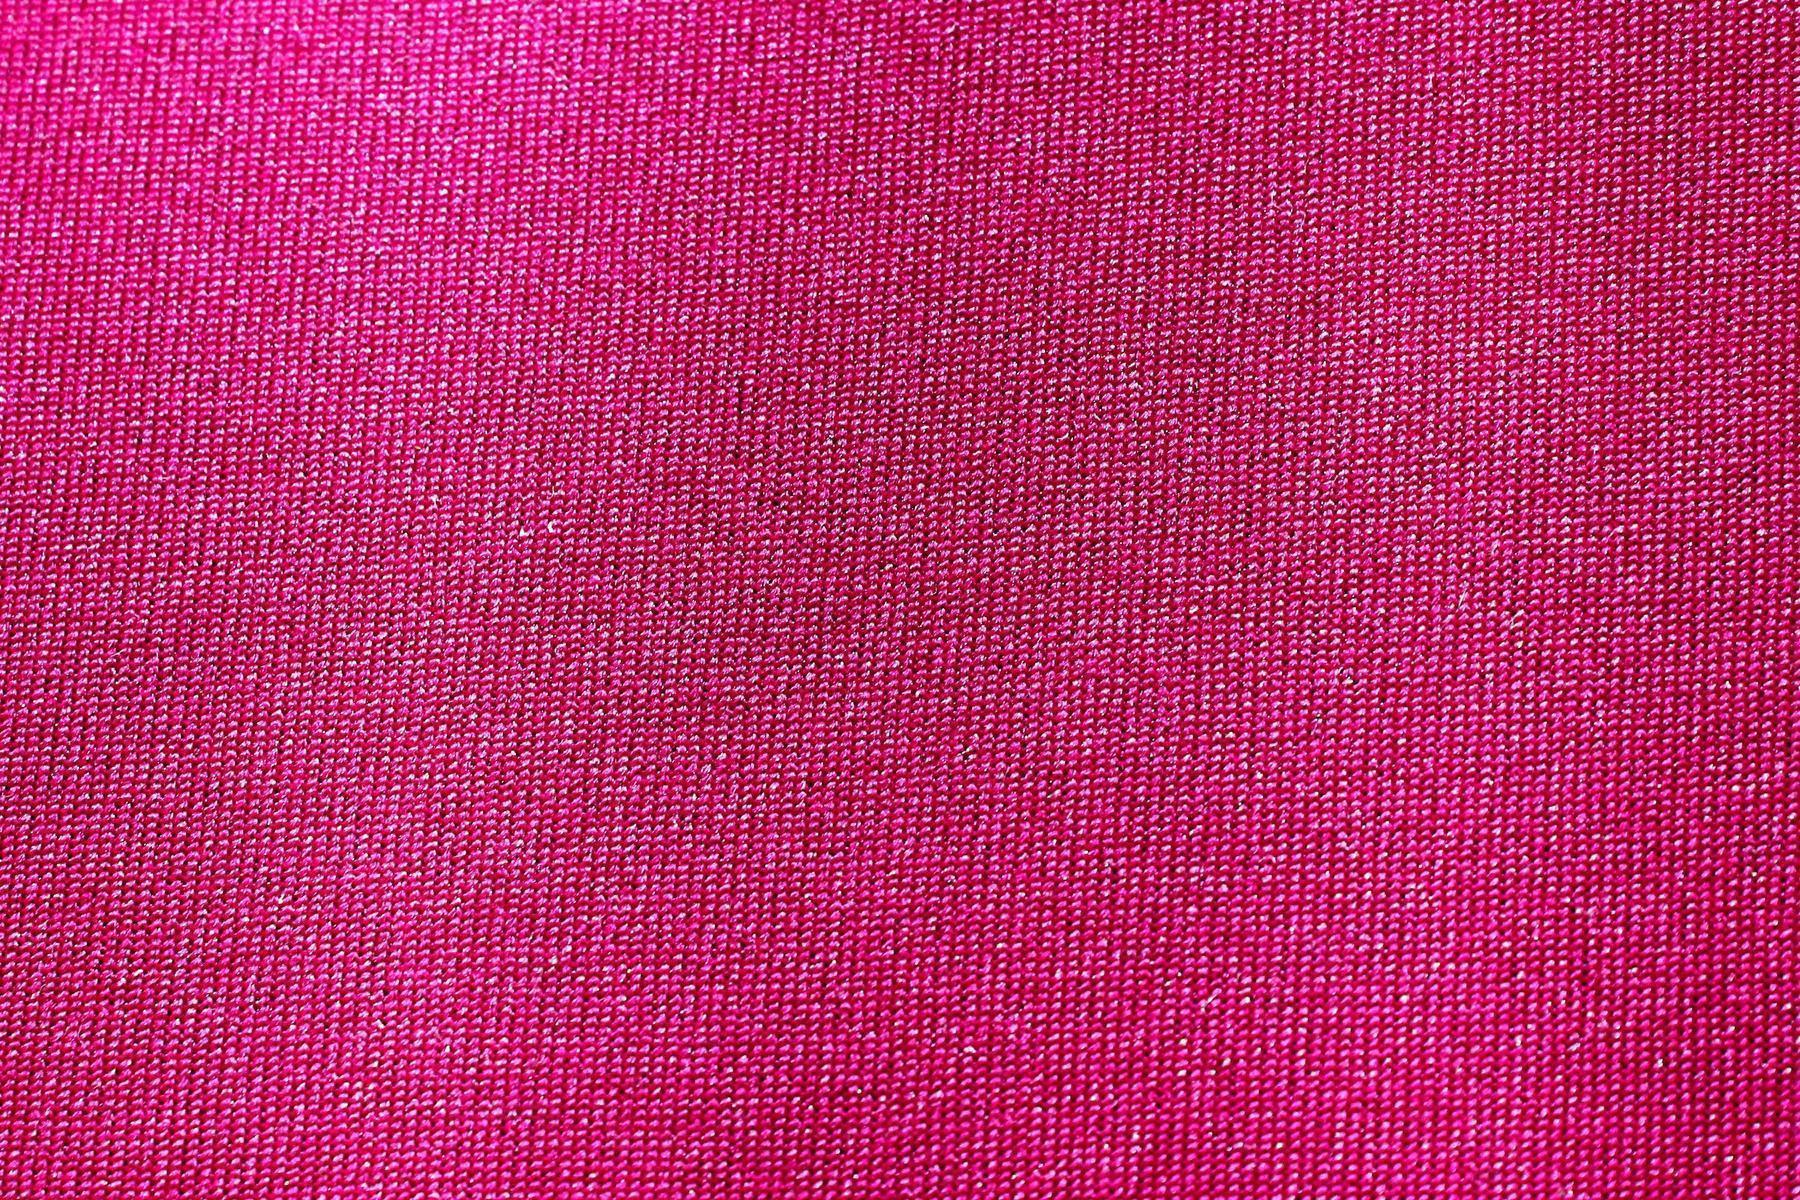 Wallpaper For > Bright Pink Wallpaper